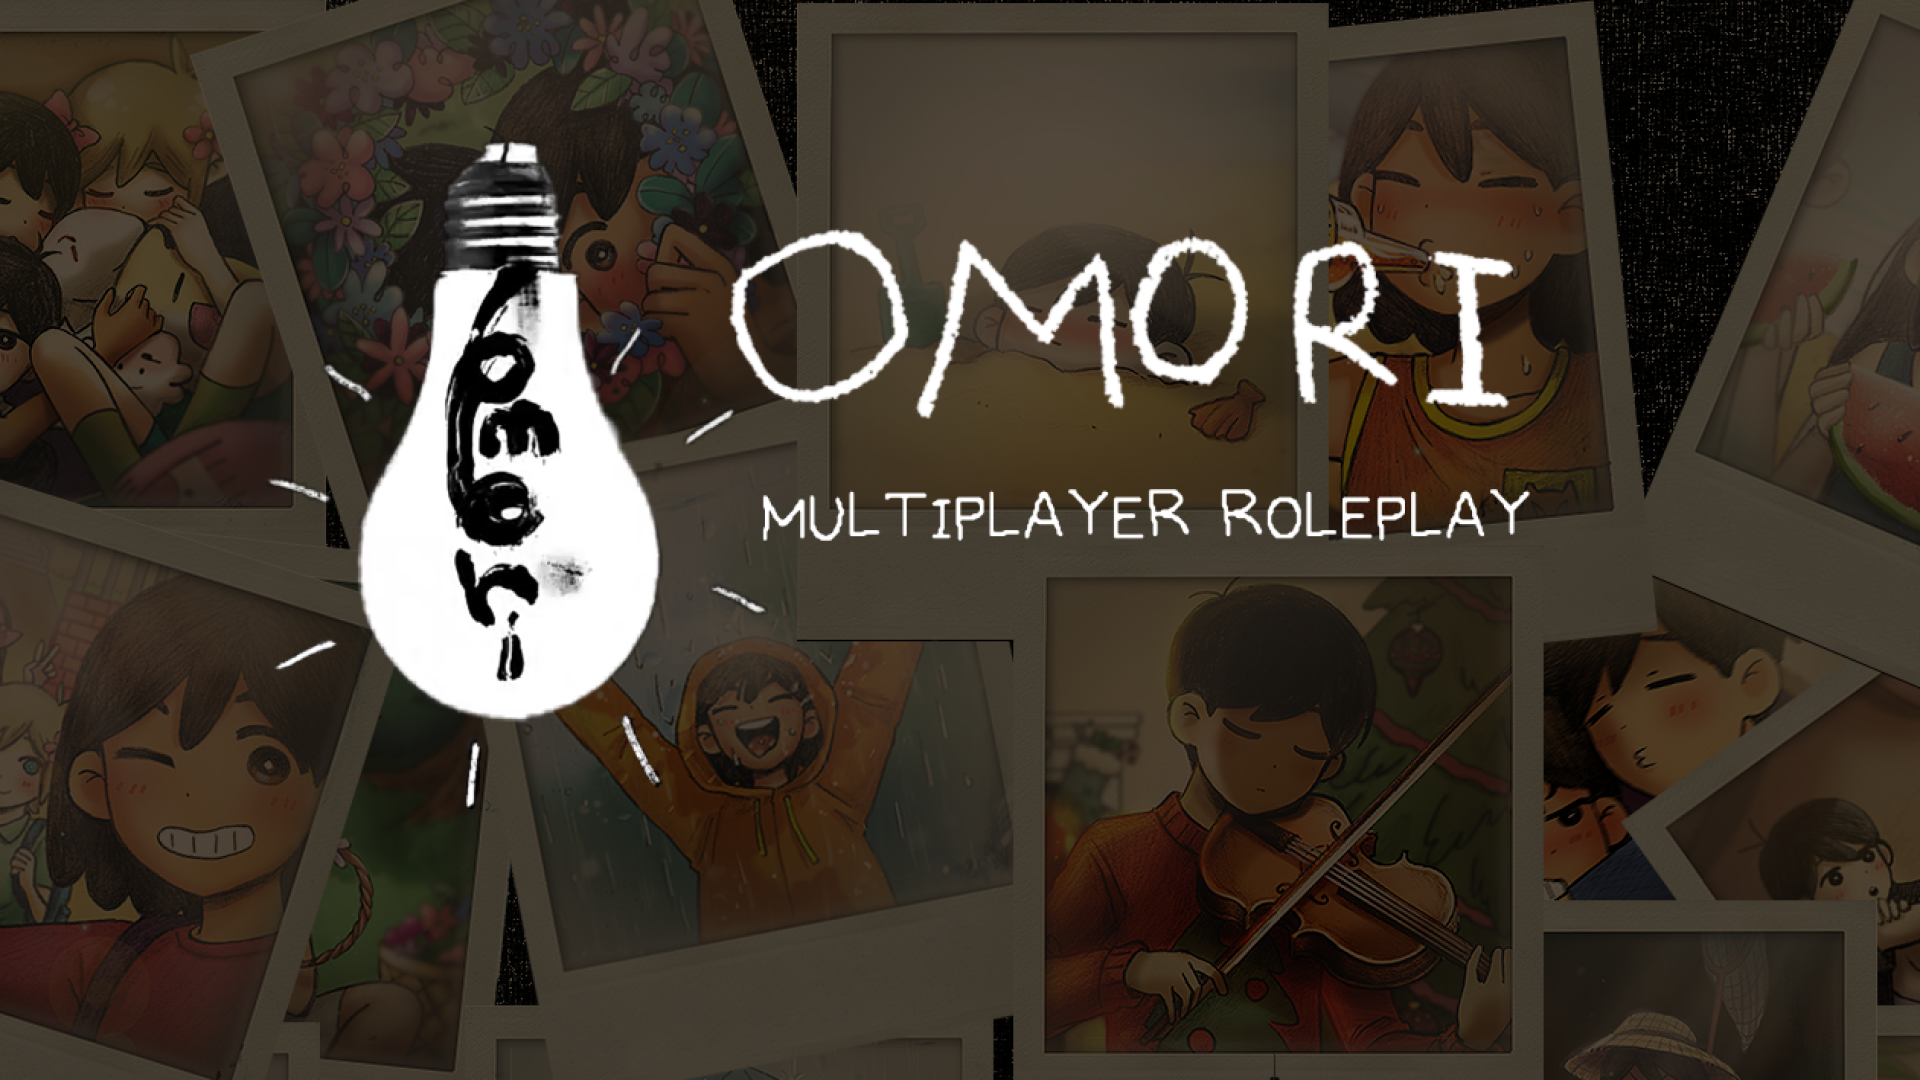 OMORI Mobile APK (Android Game) - Free Download